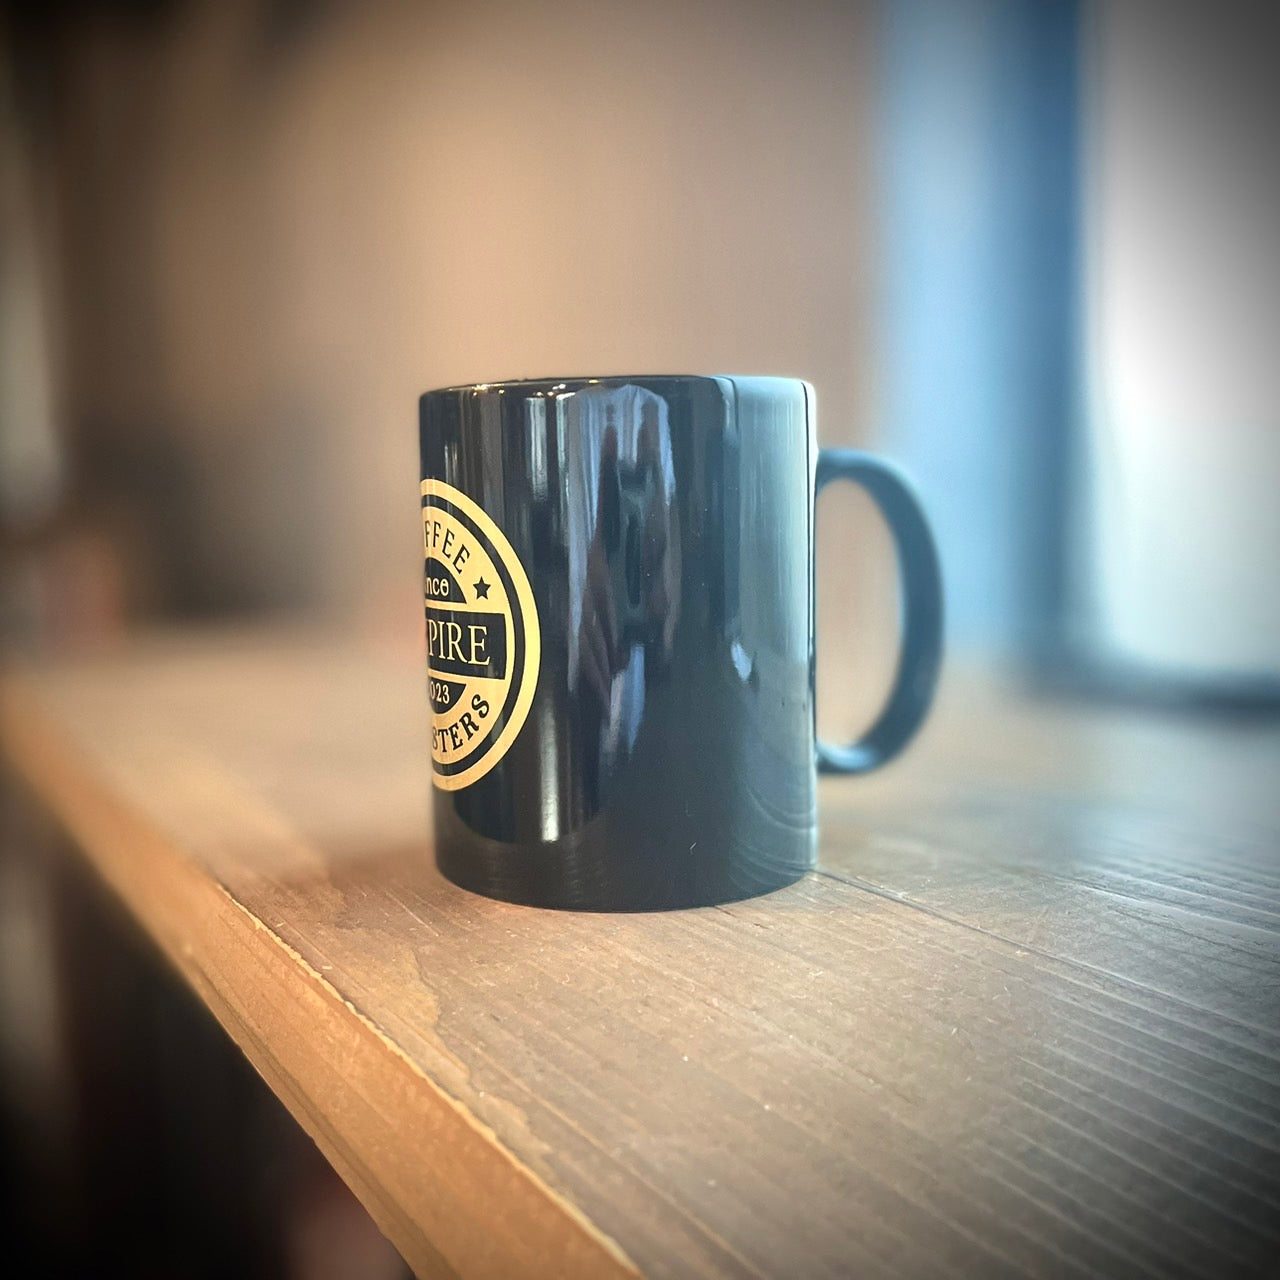 EMPIRE COFFEE ROASTERS Coffee mug （送料込み）